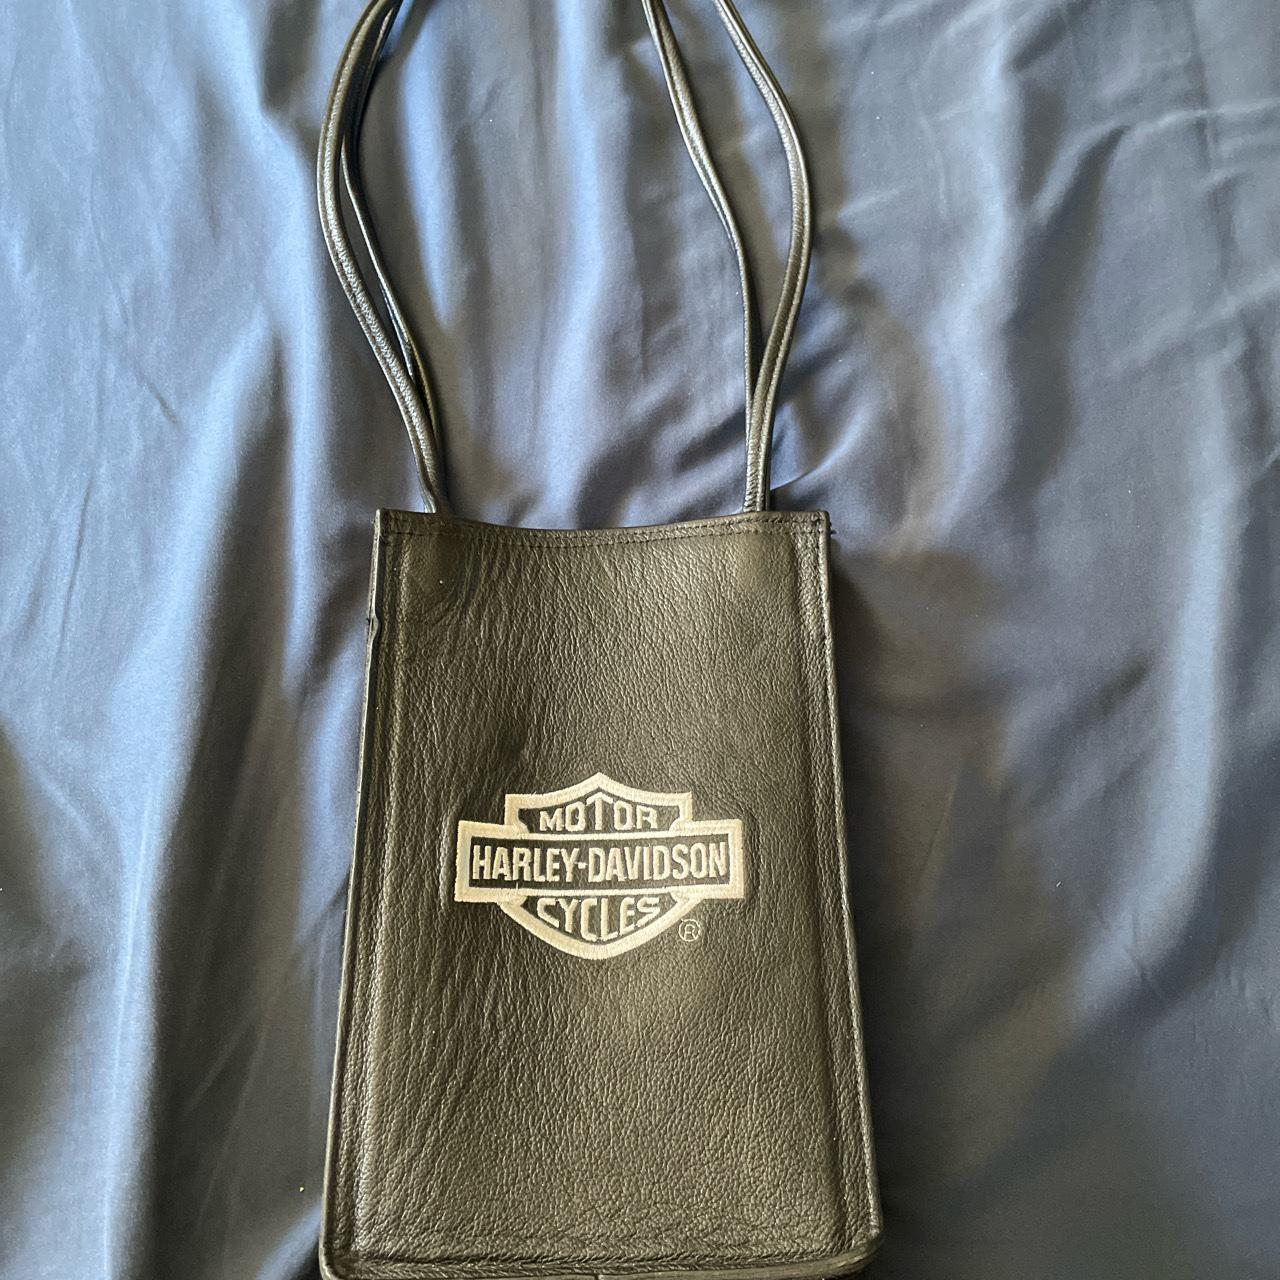 harley davidson leather tote bag